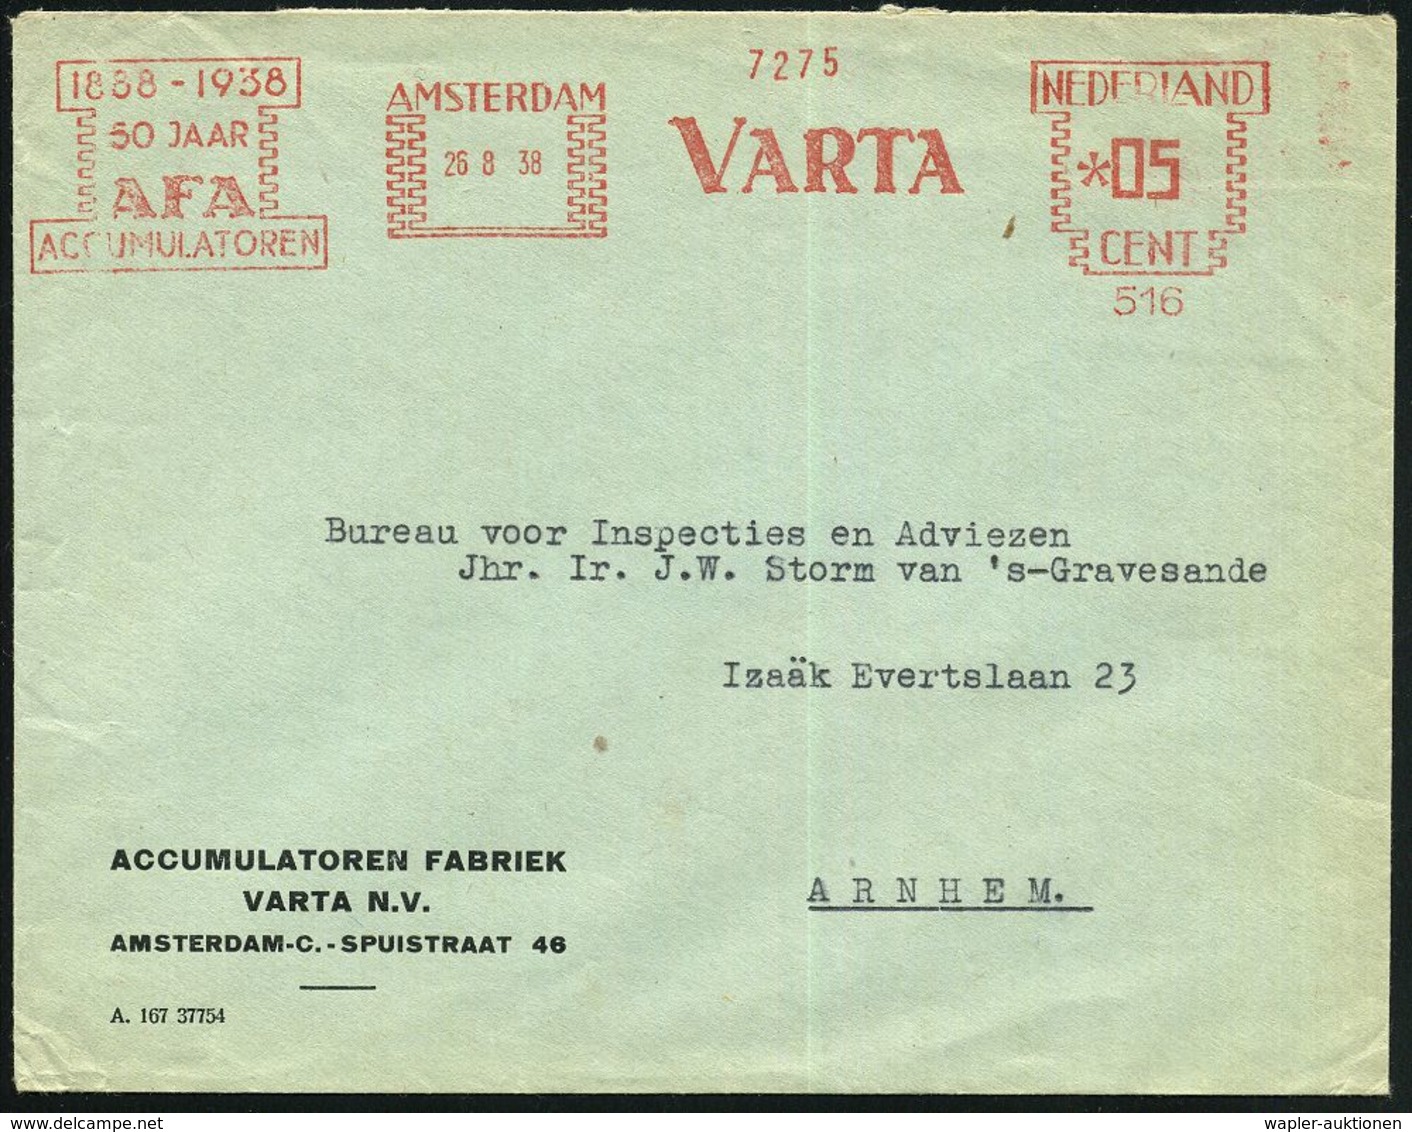 AUTOZUBEHÖR / KRAFTFAHRZEUGZUBEHÖR : NIEDERLANDE 1938 (26.8.) Jubil.-AFS.: AMSTERDAM/516/1888 - 1938/50 JAAR/AFA/ACCUMUL - Voitures